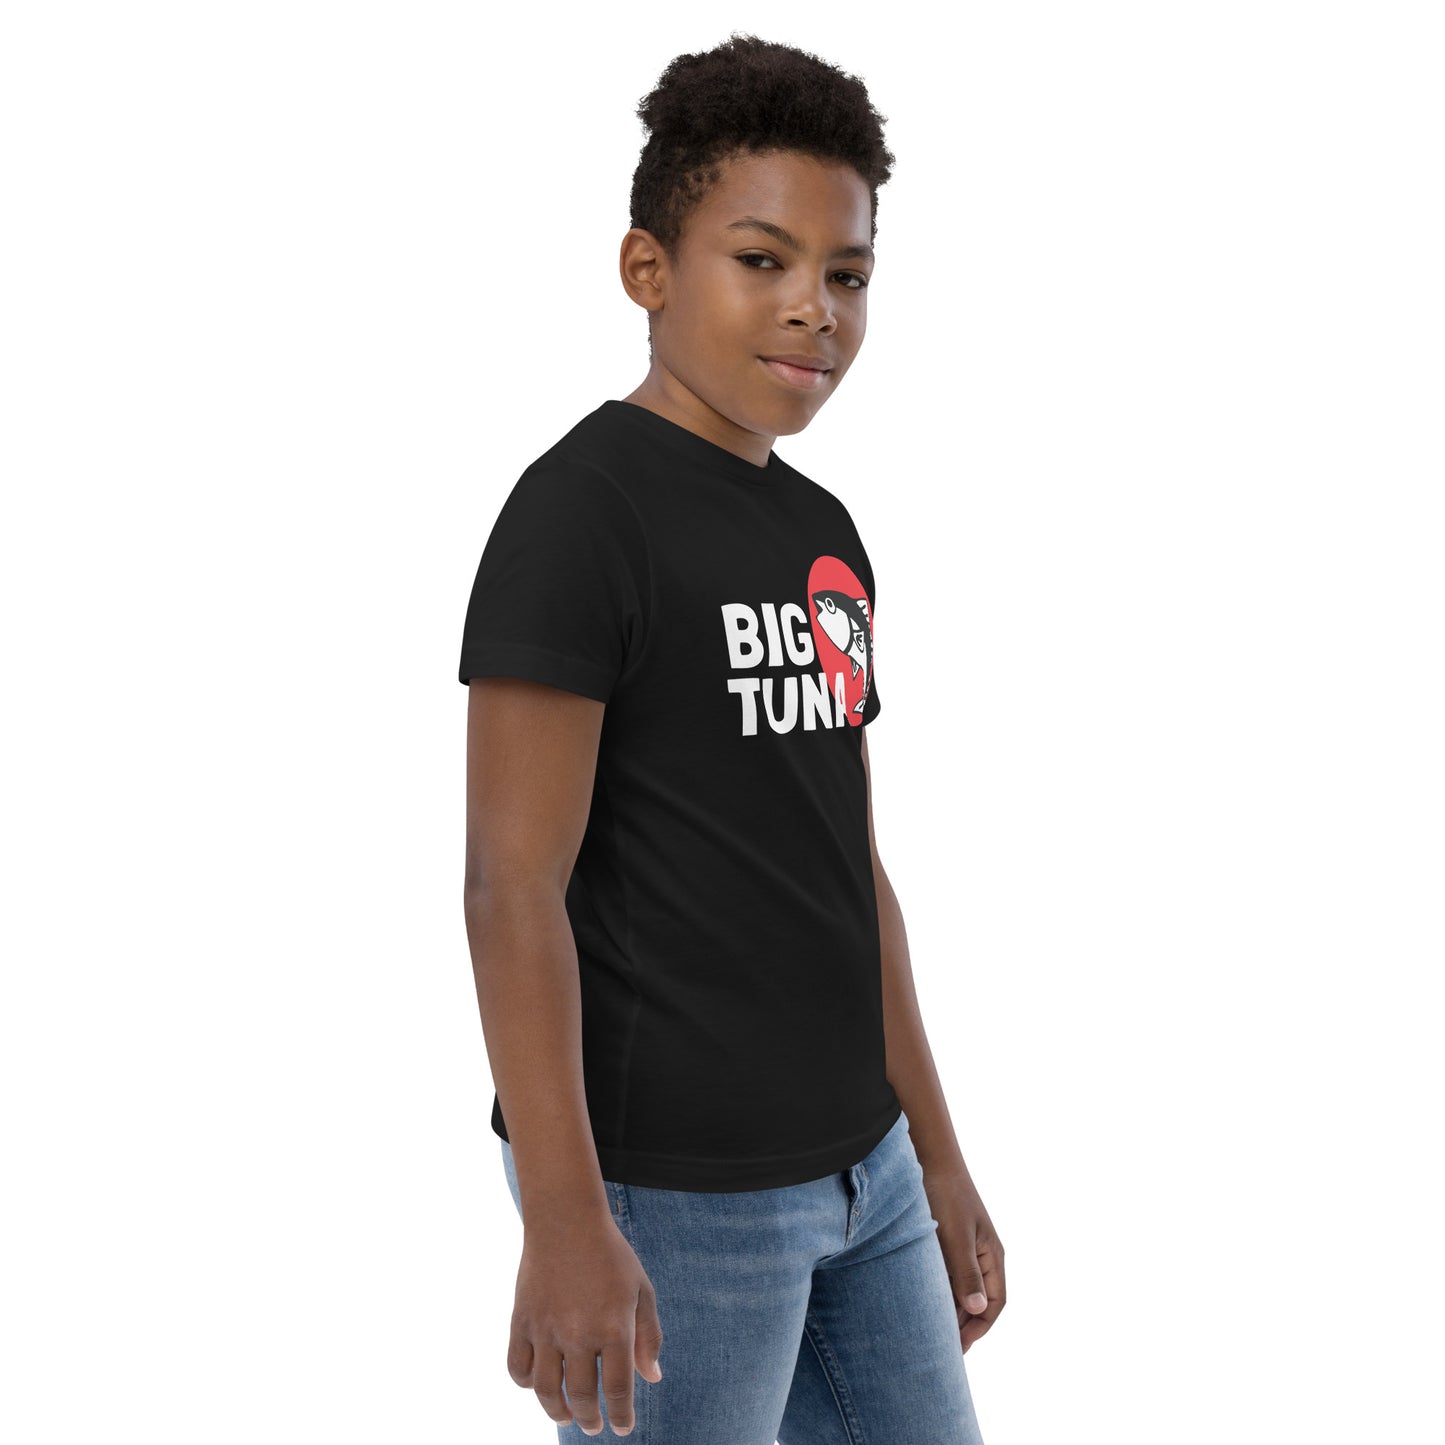 Big Tuna Youth T-shirt